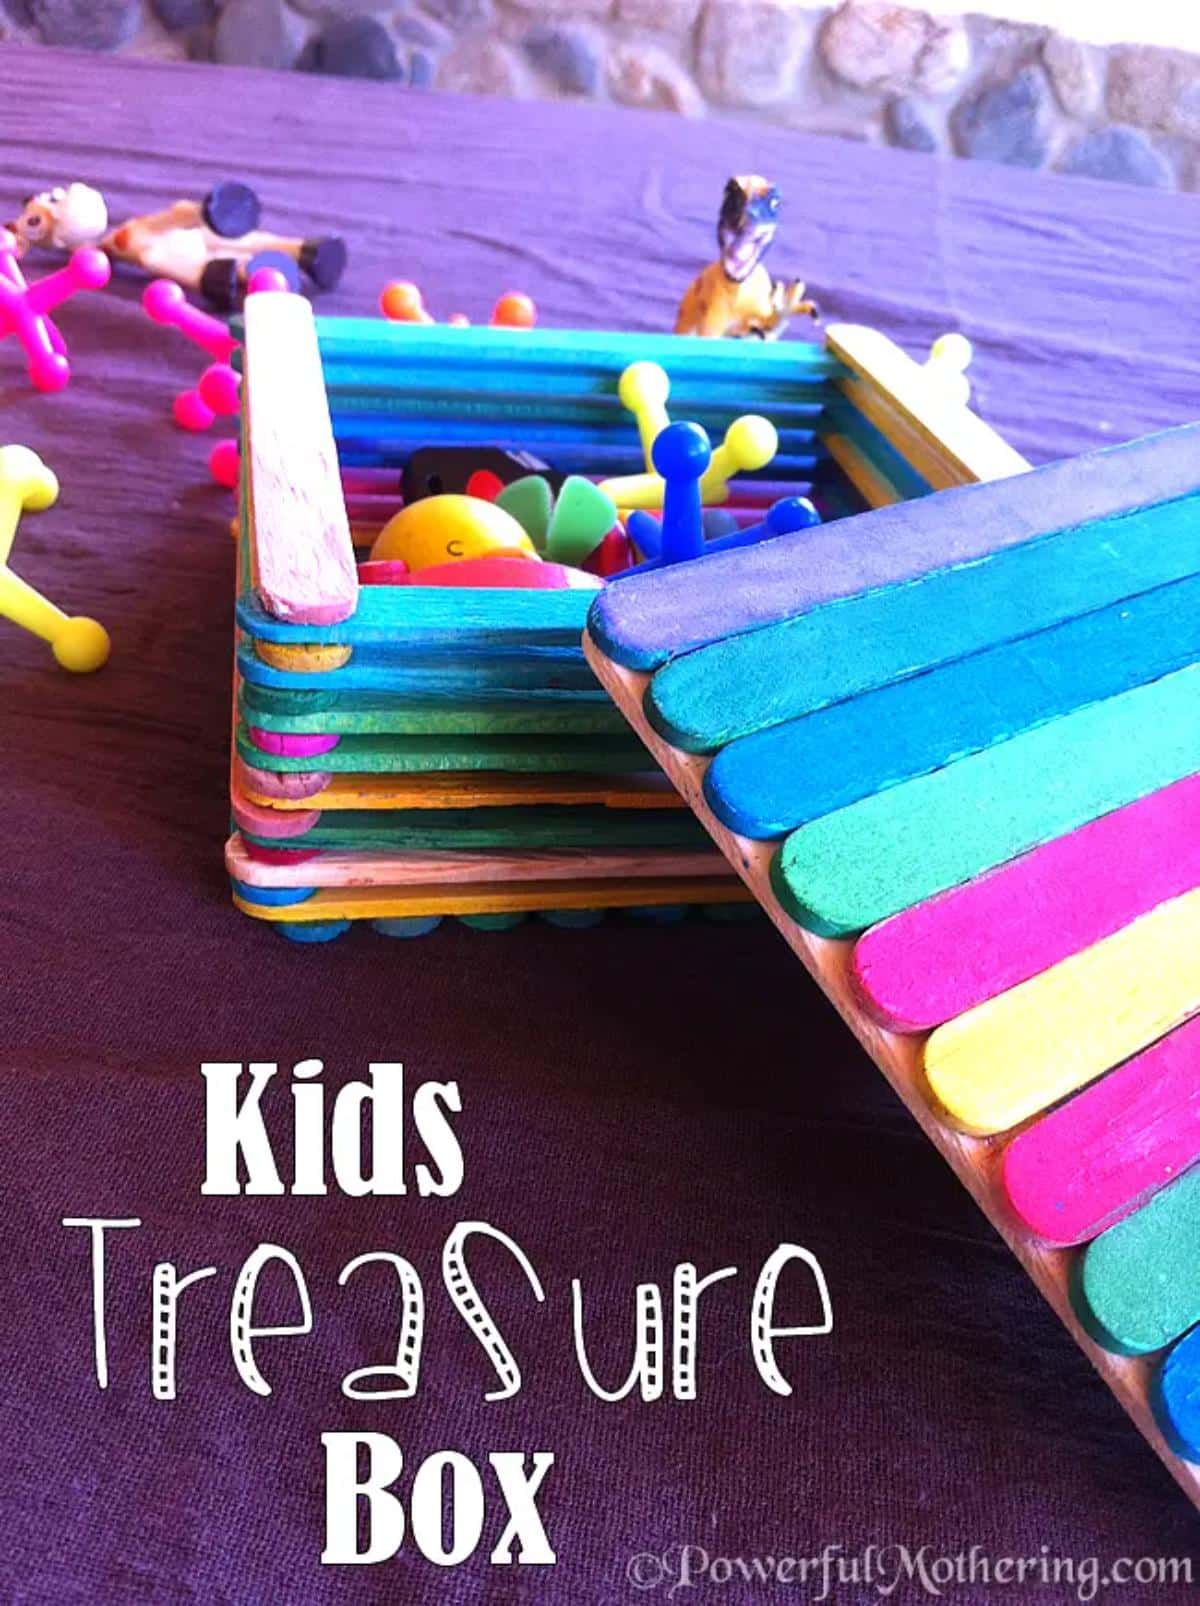 Kids Treasure Box Made